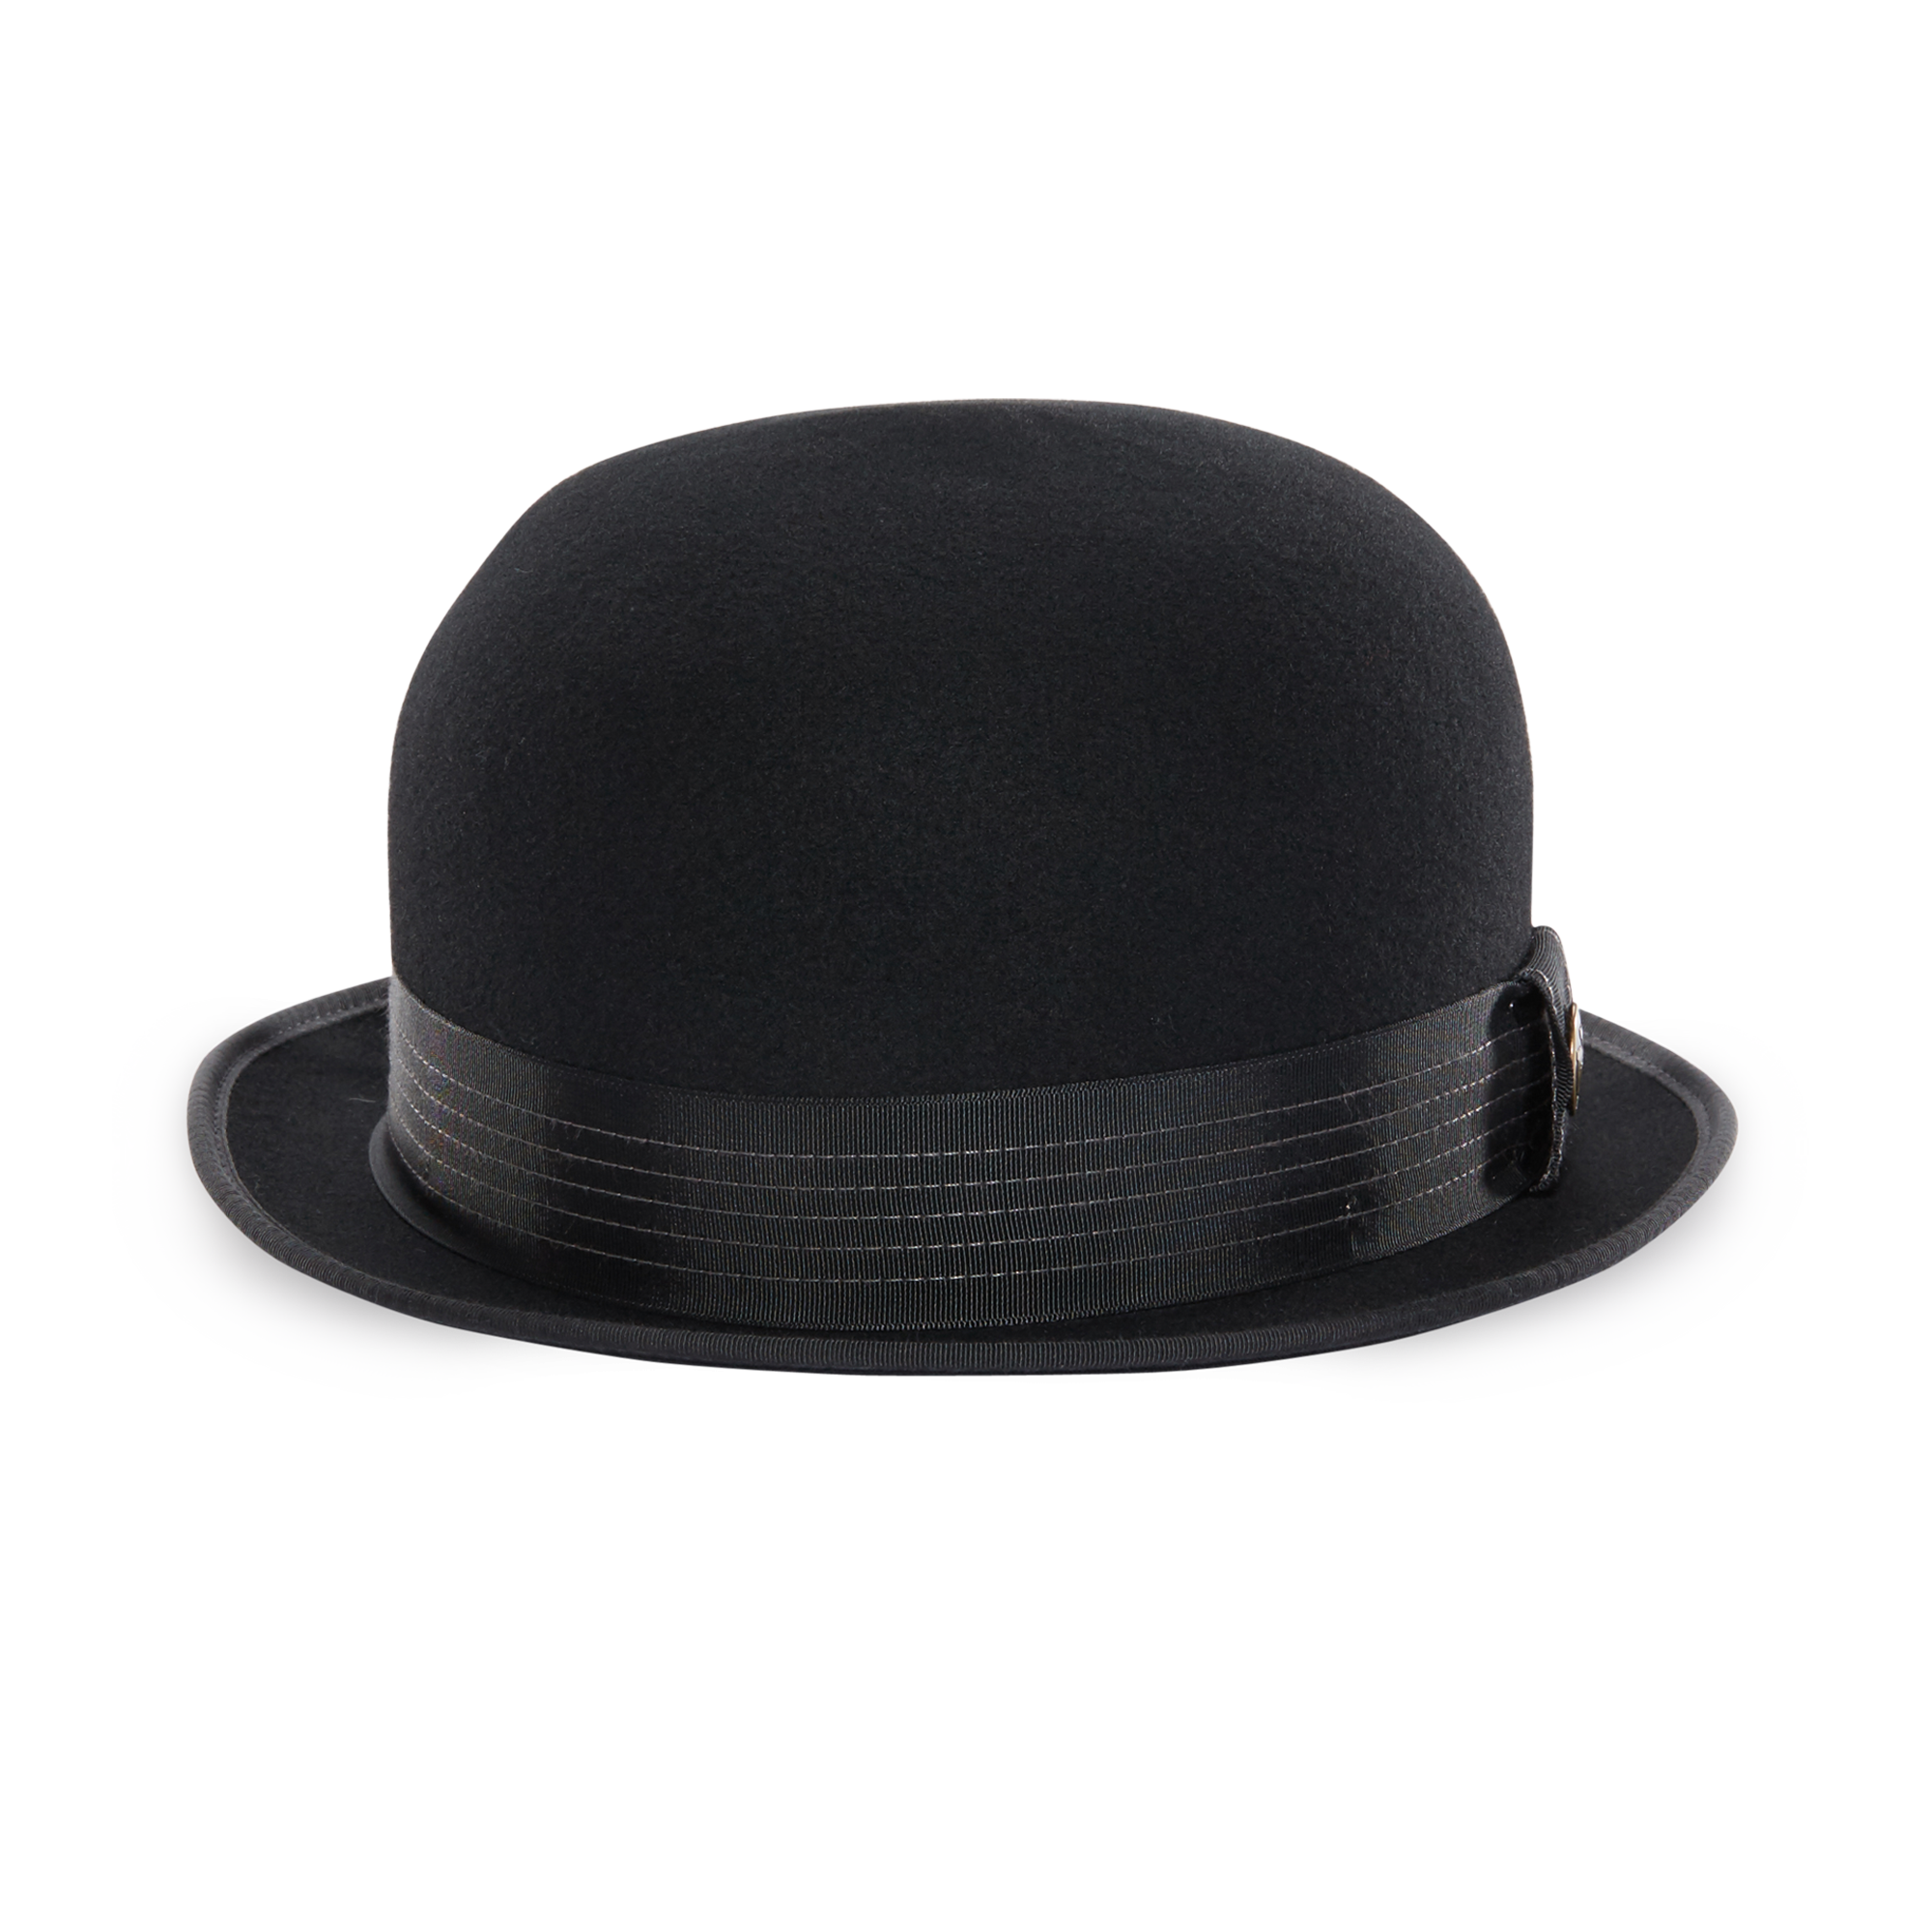 Bowler Hat PNG HD-PlusPNG.com